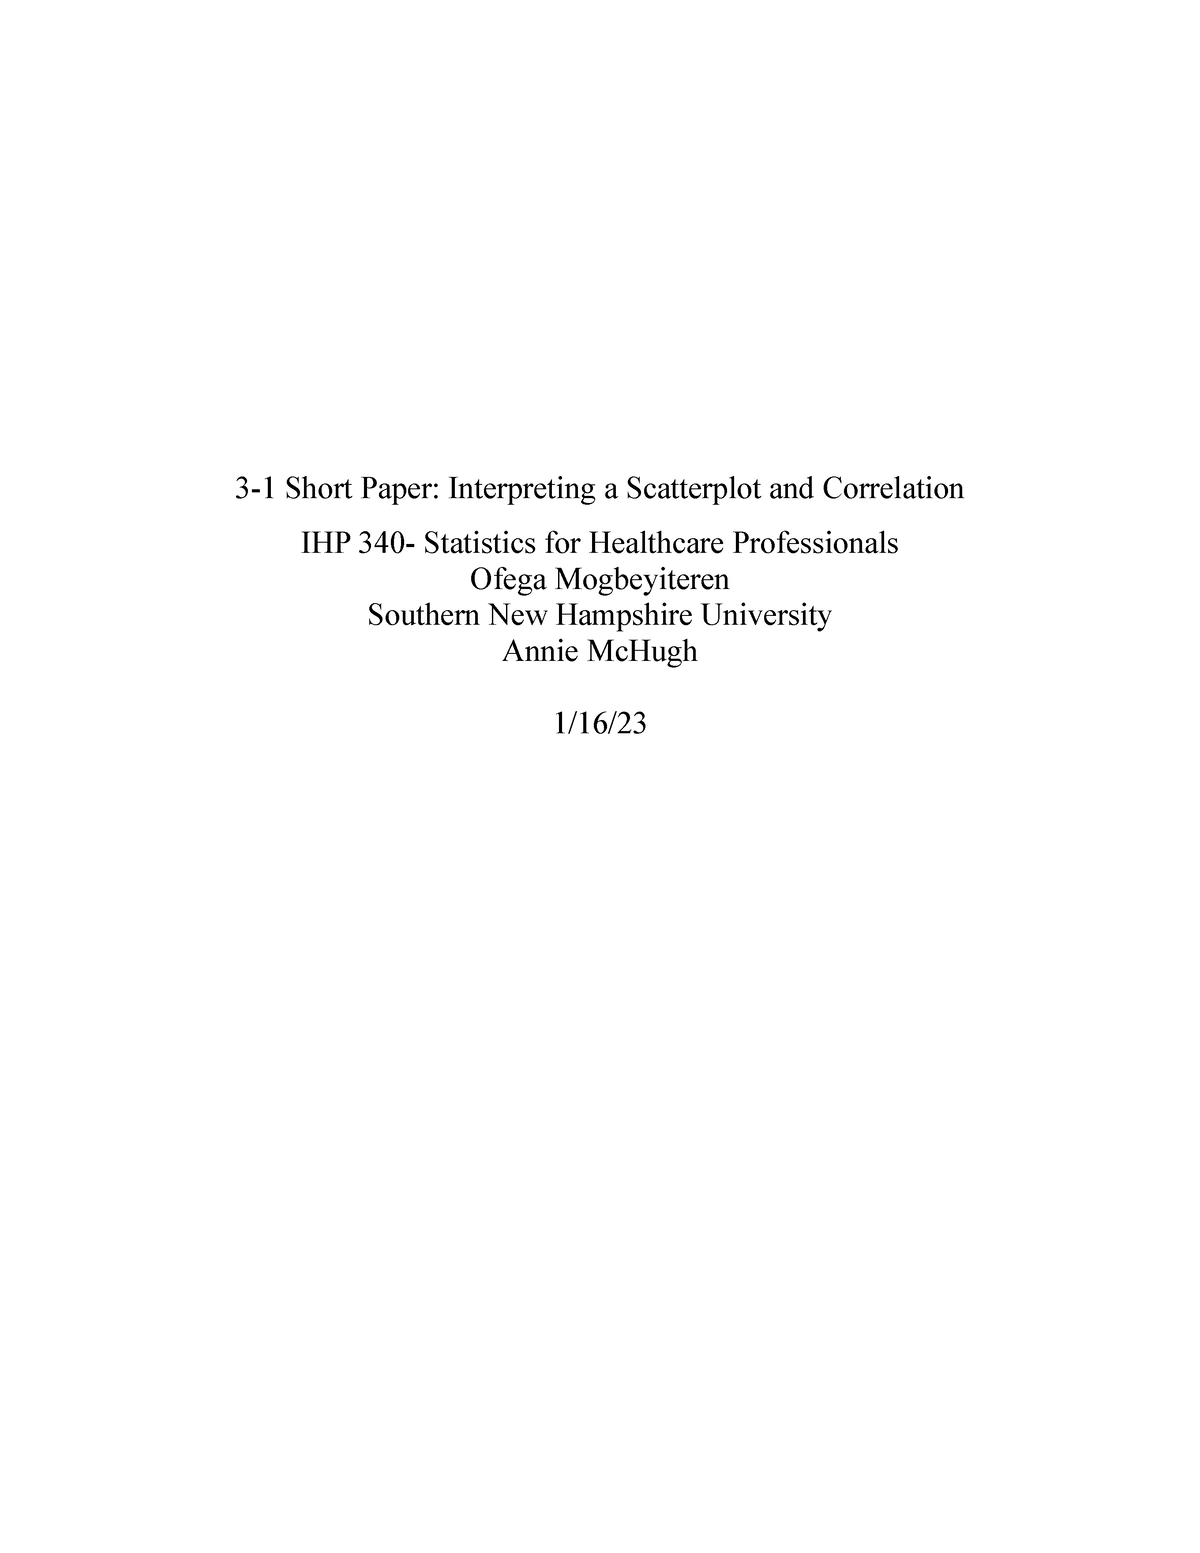 IHP 340 31 Short PaperInterpreting a Scatterplot and Correlation 3